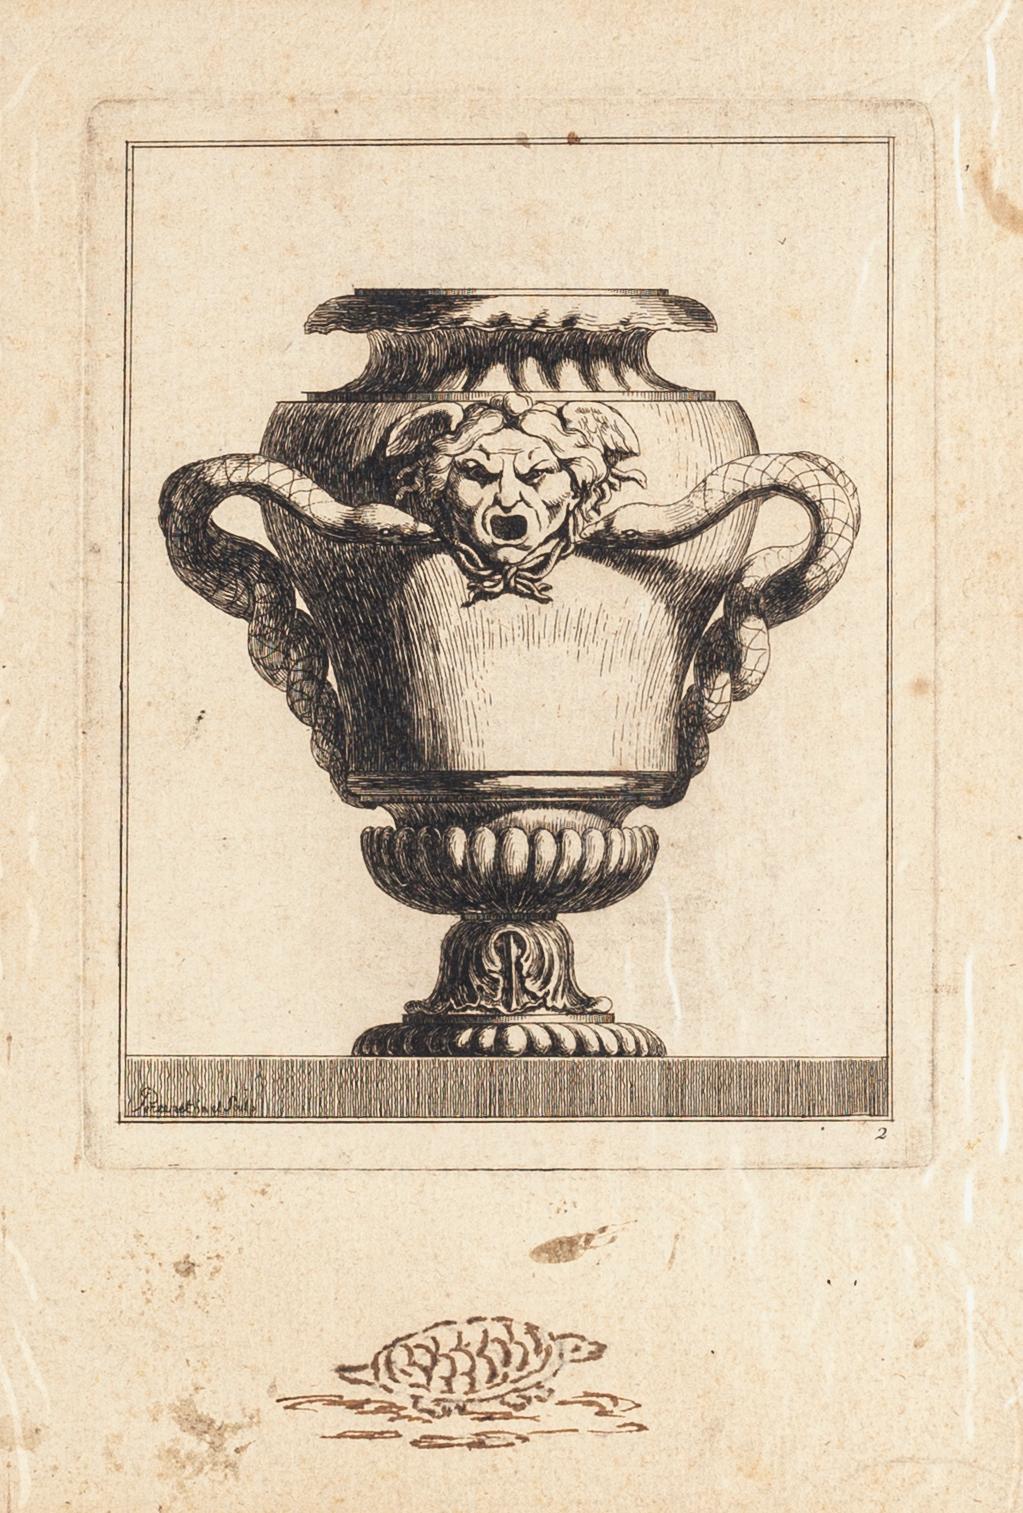 Louis Percenet Figurative Print - Design for Vase - Original Etching - Late 18th Century